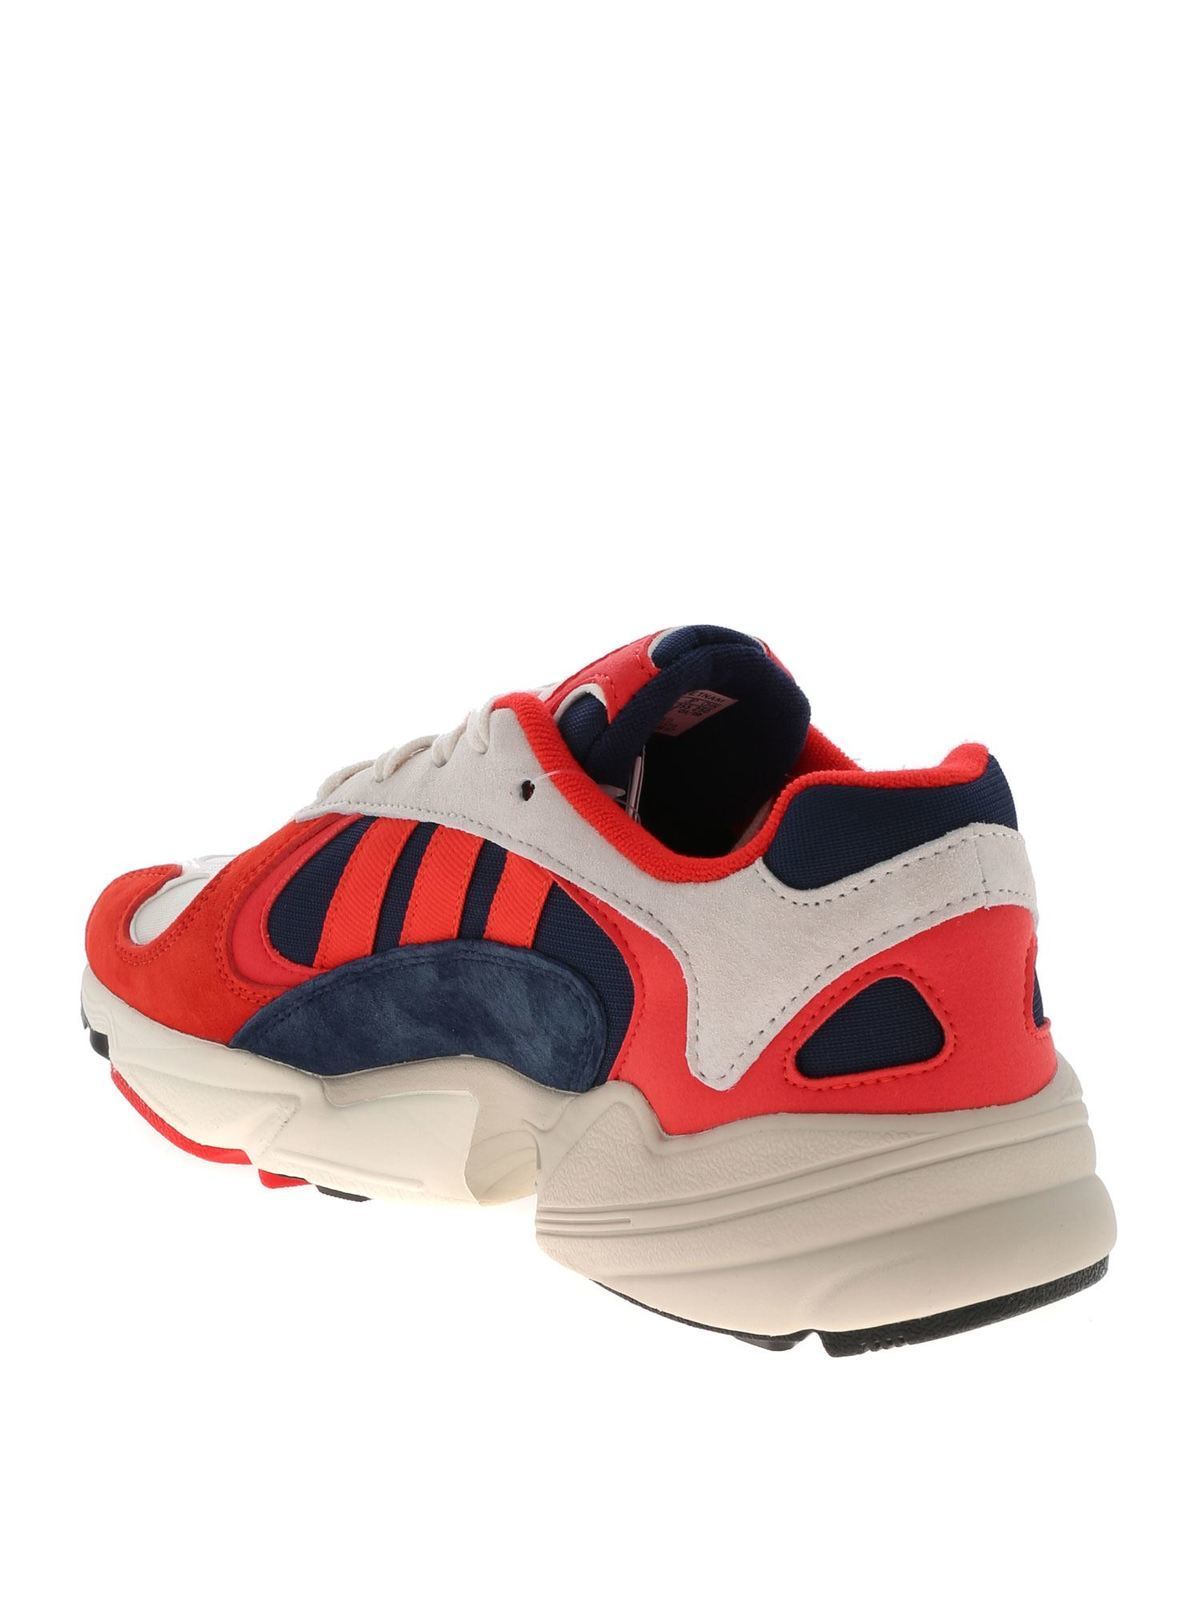 Adidas Originals Yung 1 sneaker in orange -